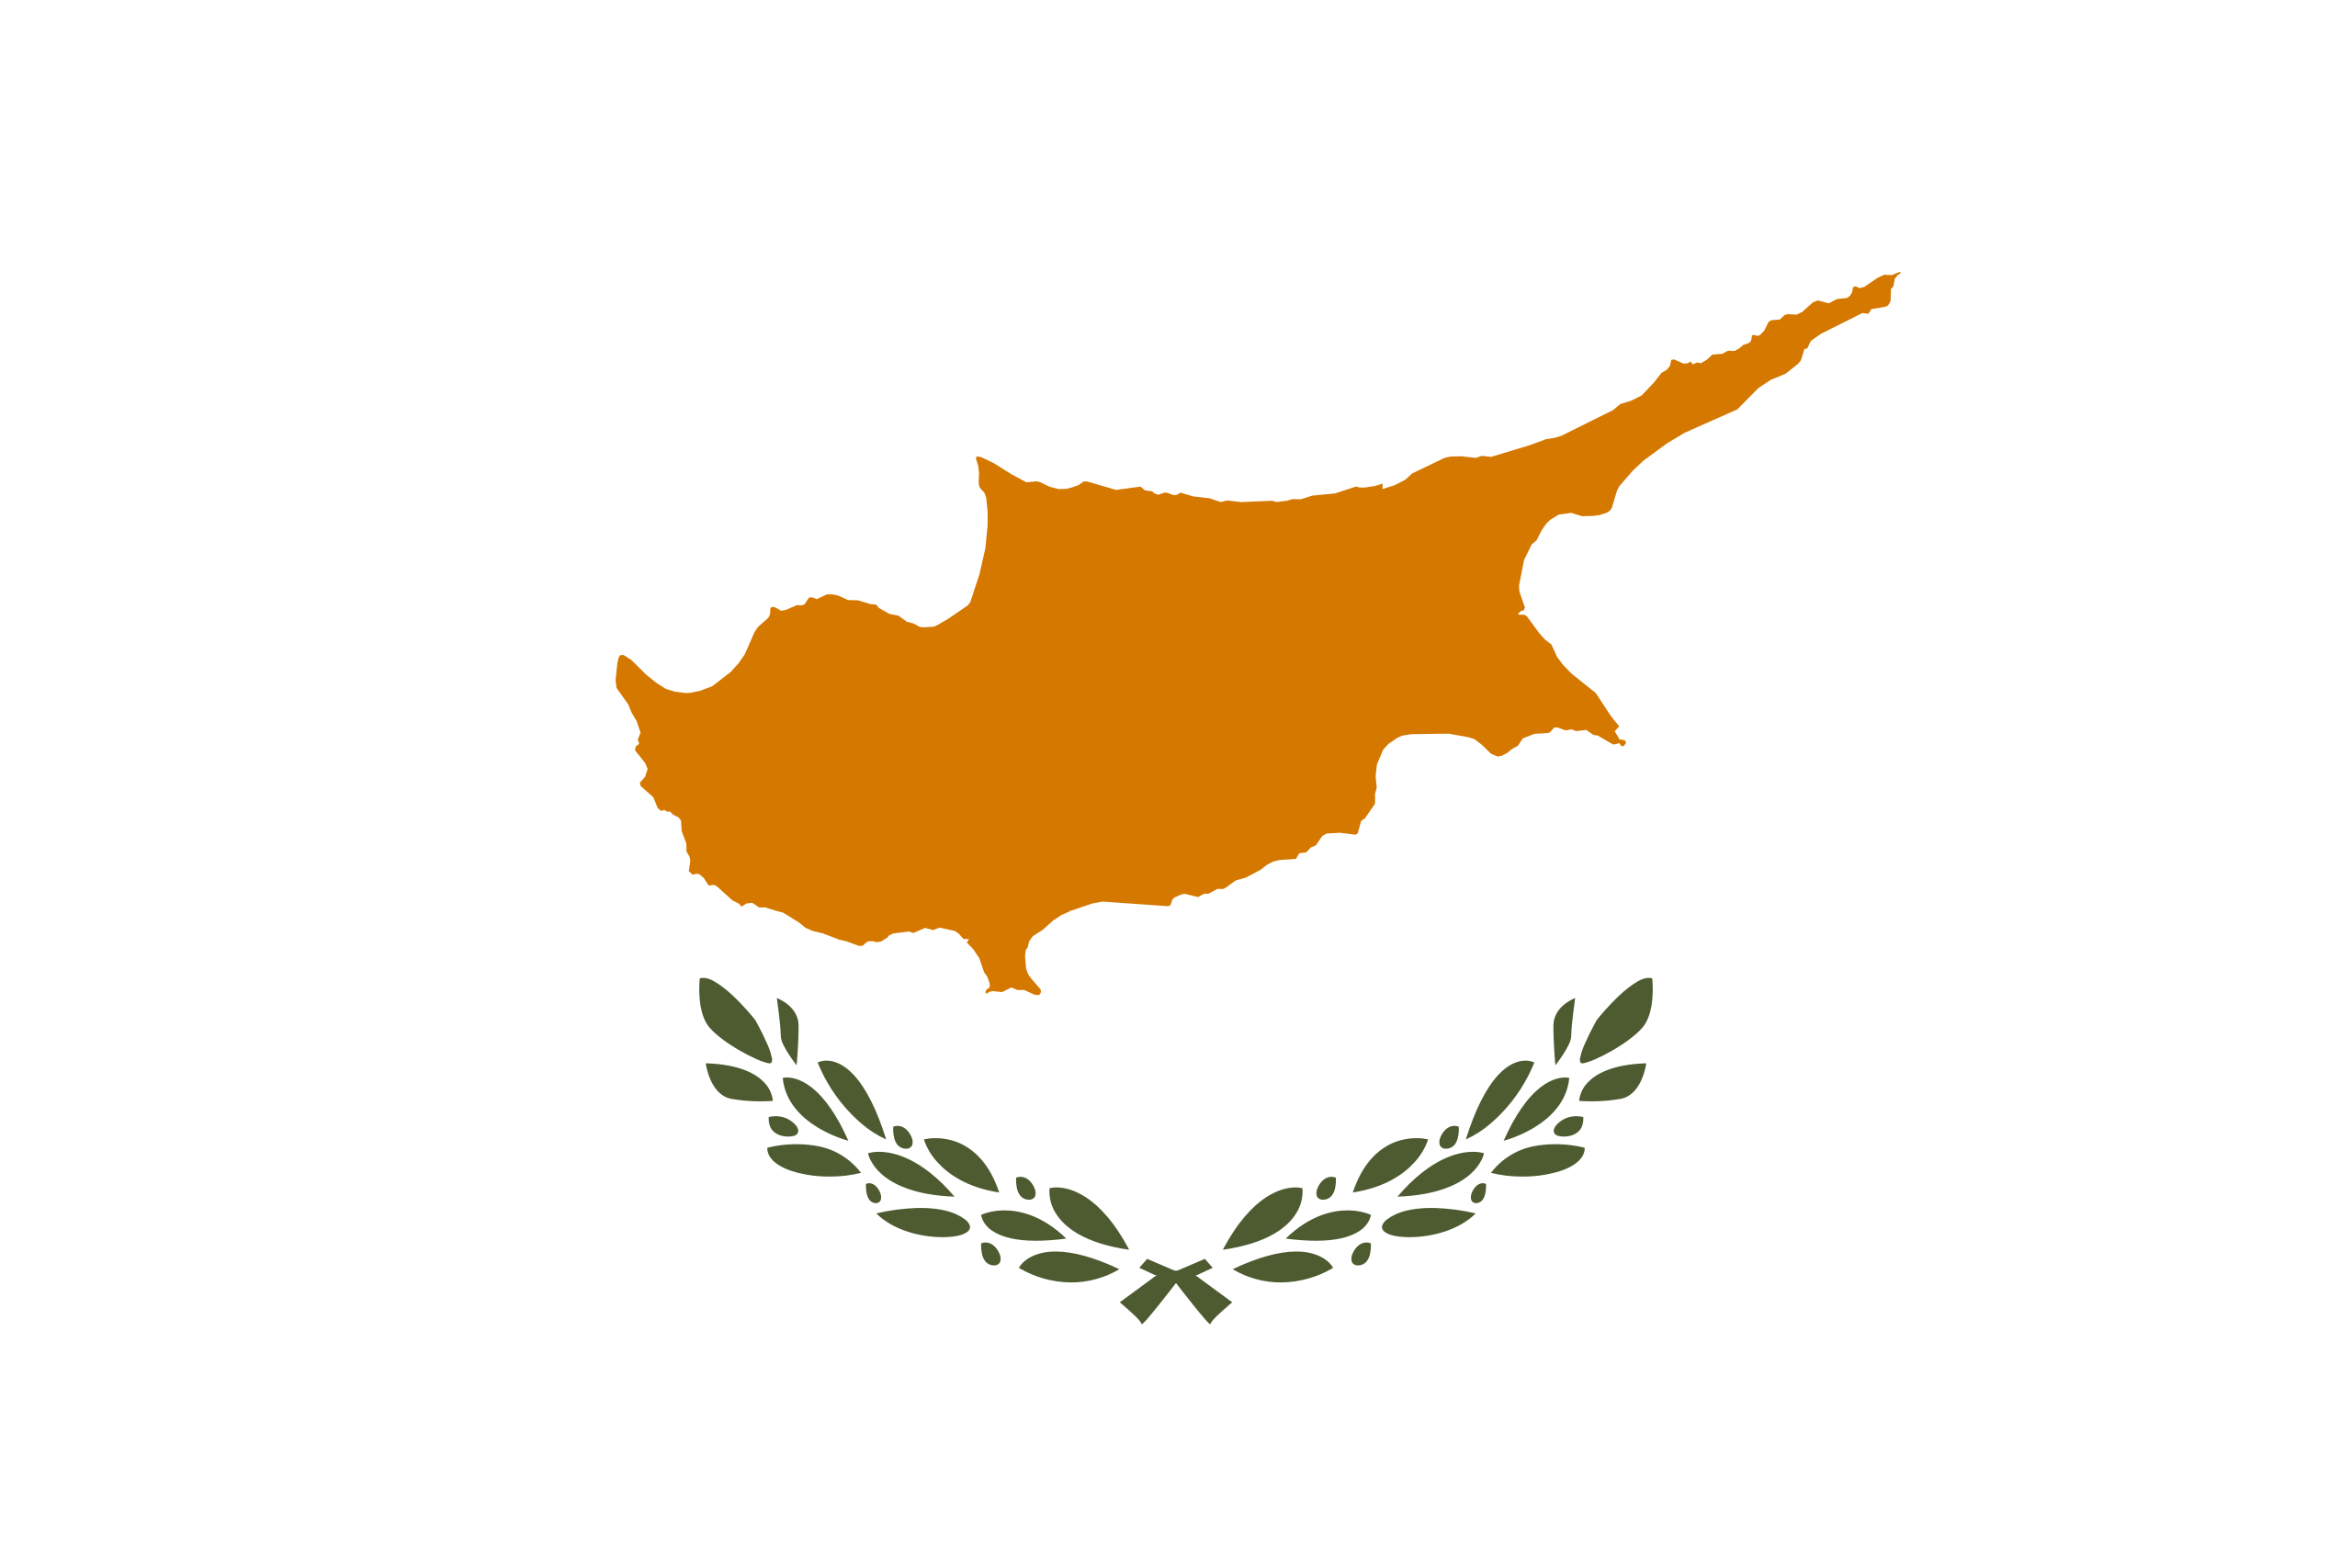 2.2. CYPRUS